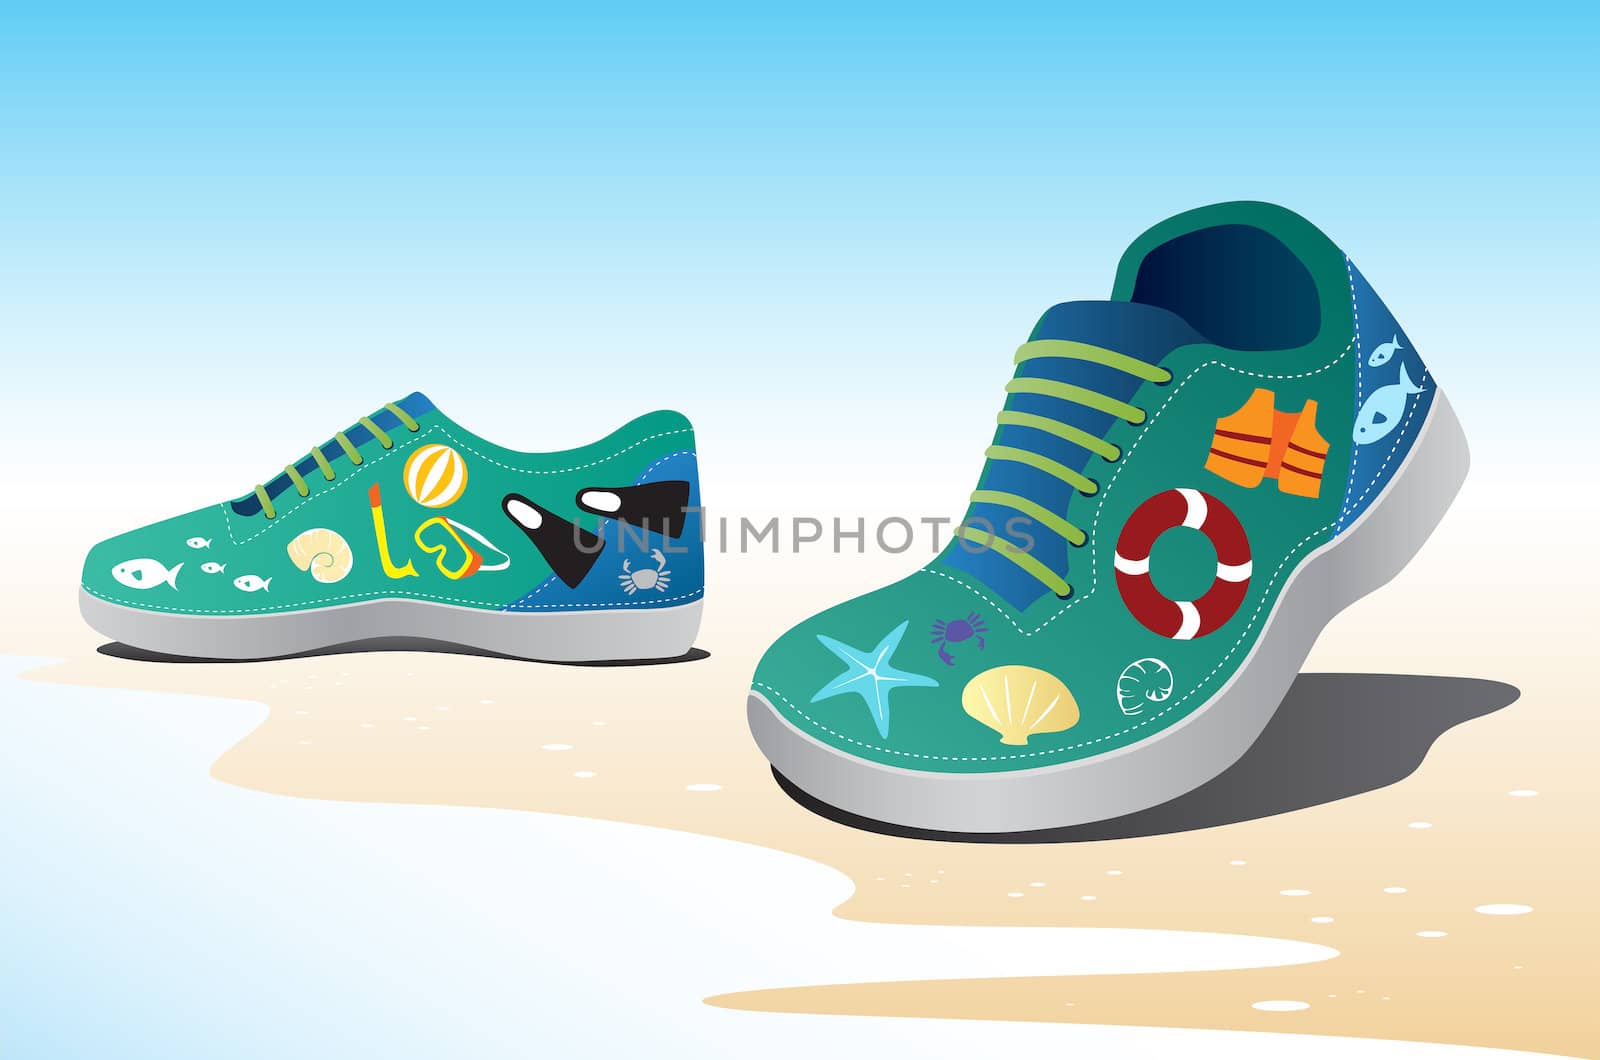 sea icon on green shoe, travel concept